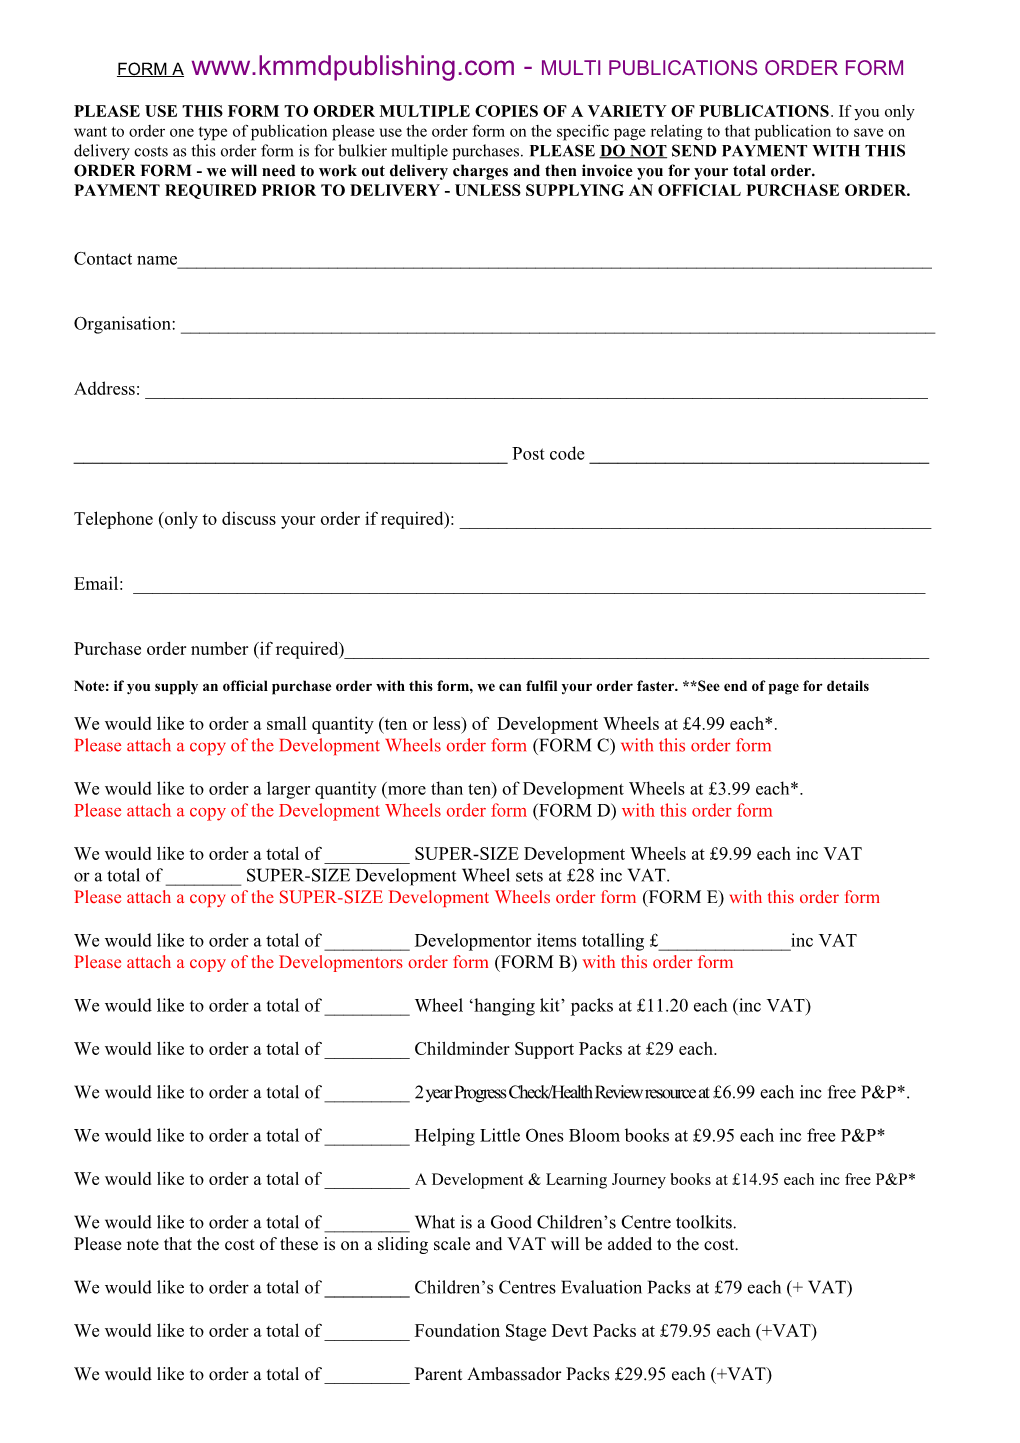 Form a - Multi Publications Order Form